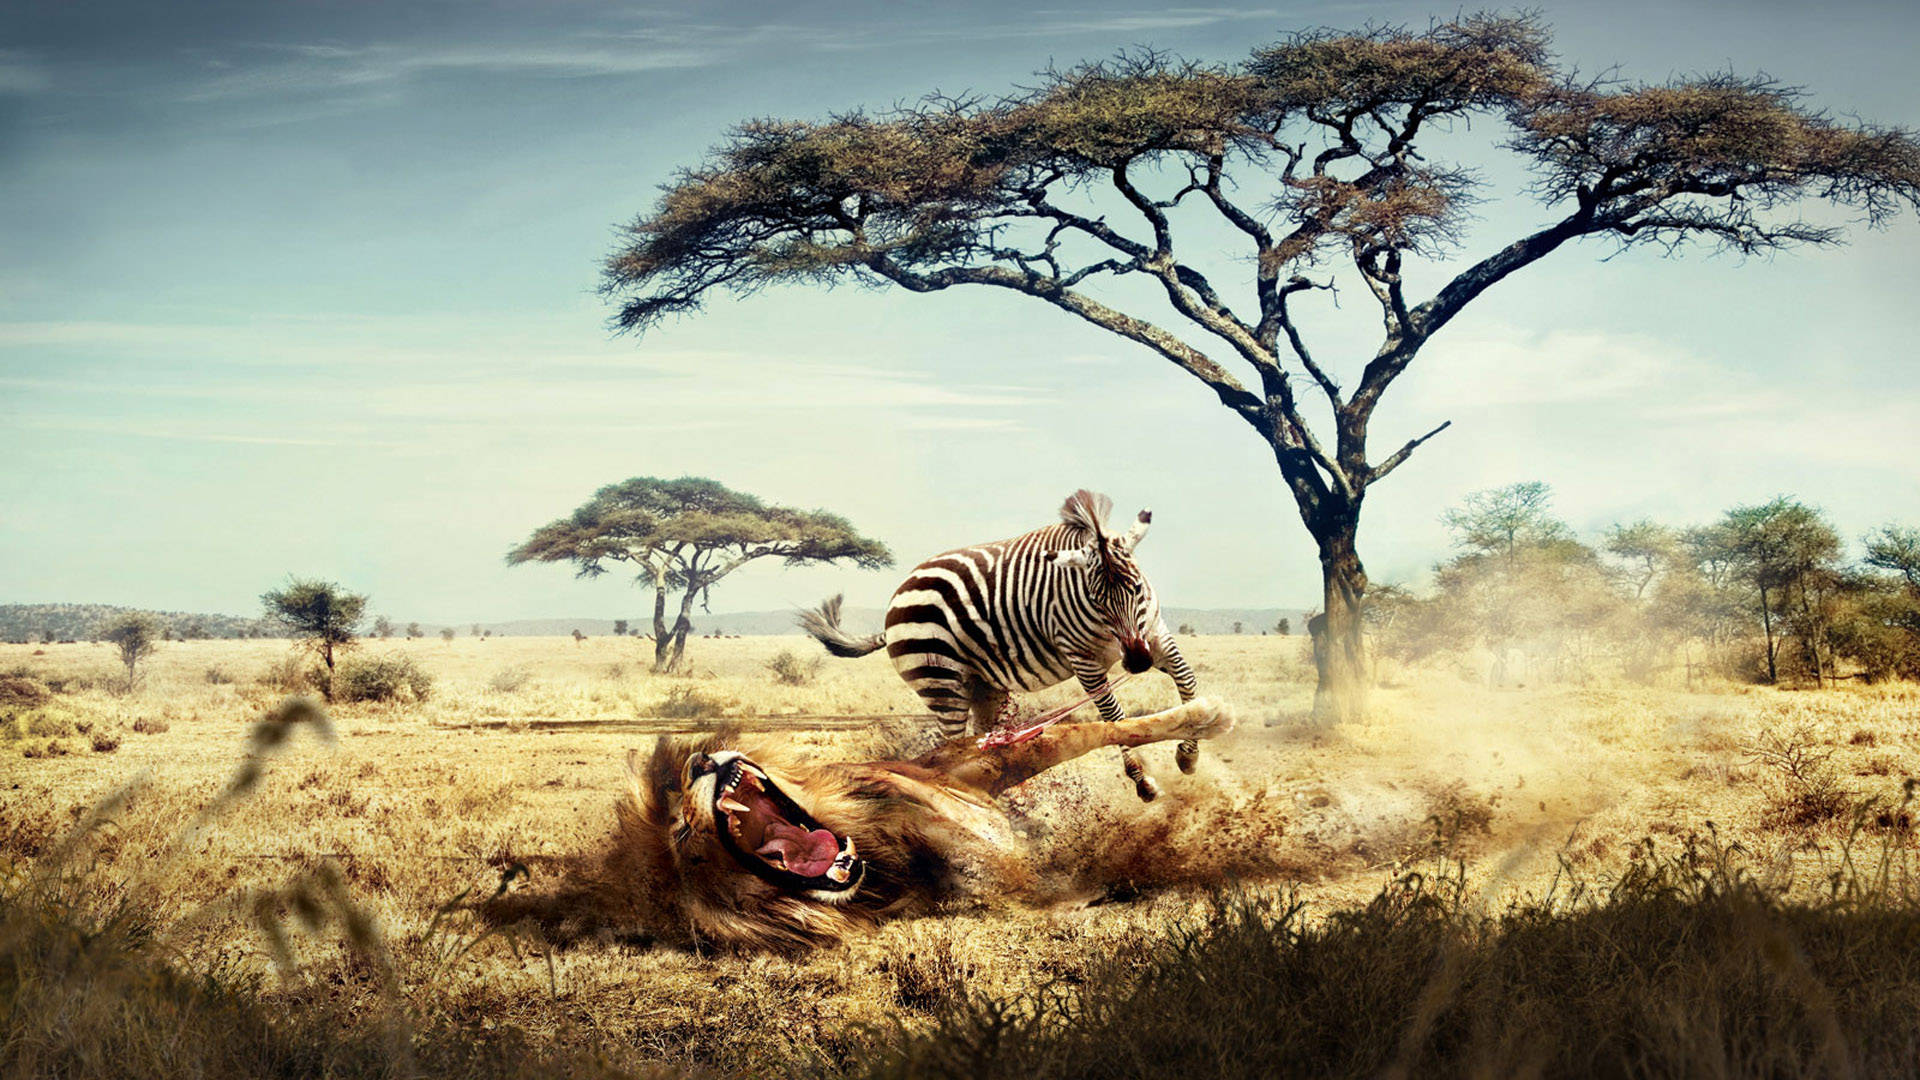 Lion Zebra Fighting Awesome Animal Wallpaper